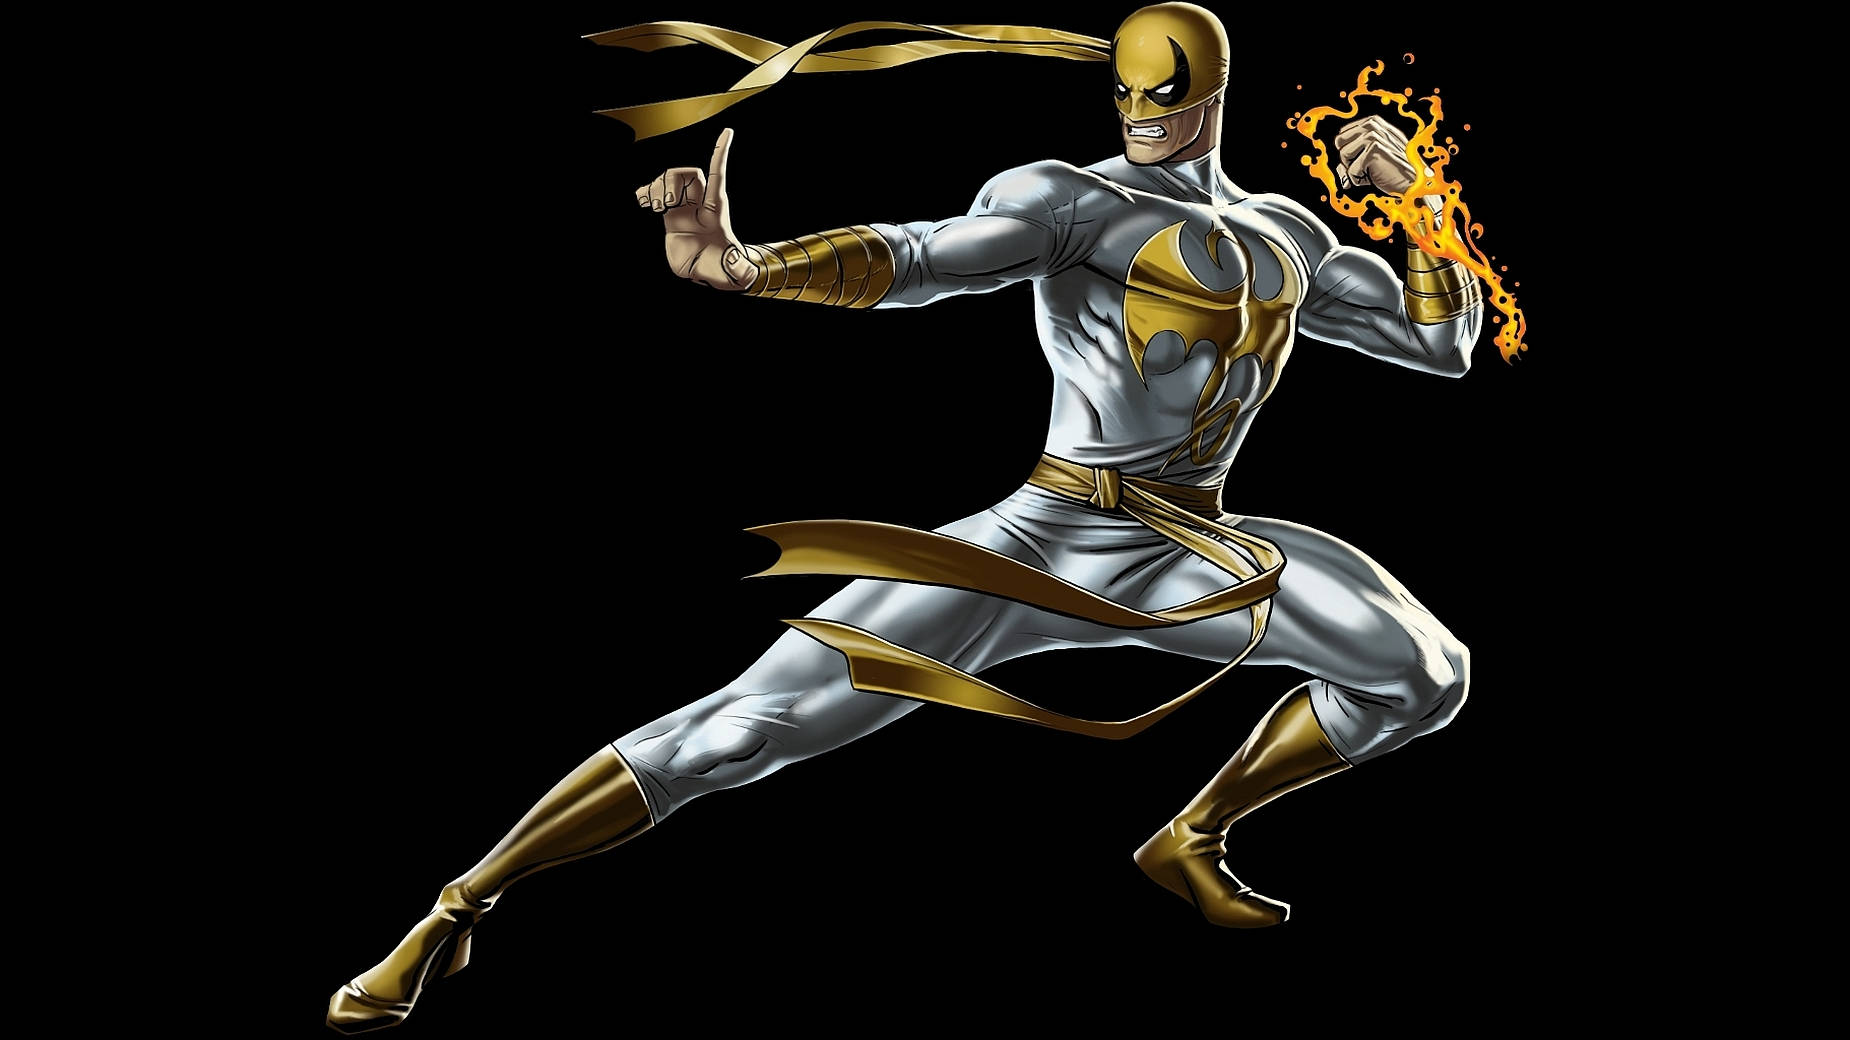 Iron Fist Superhero Power Pose Background